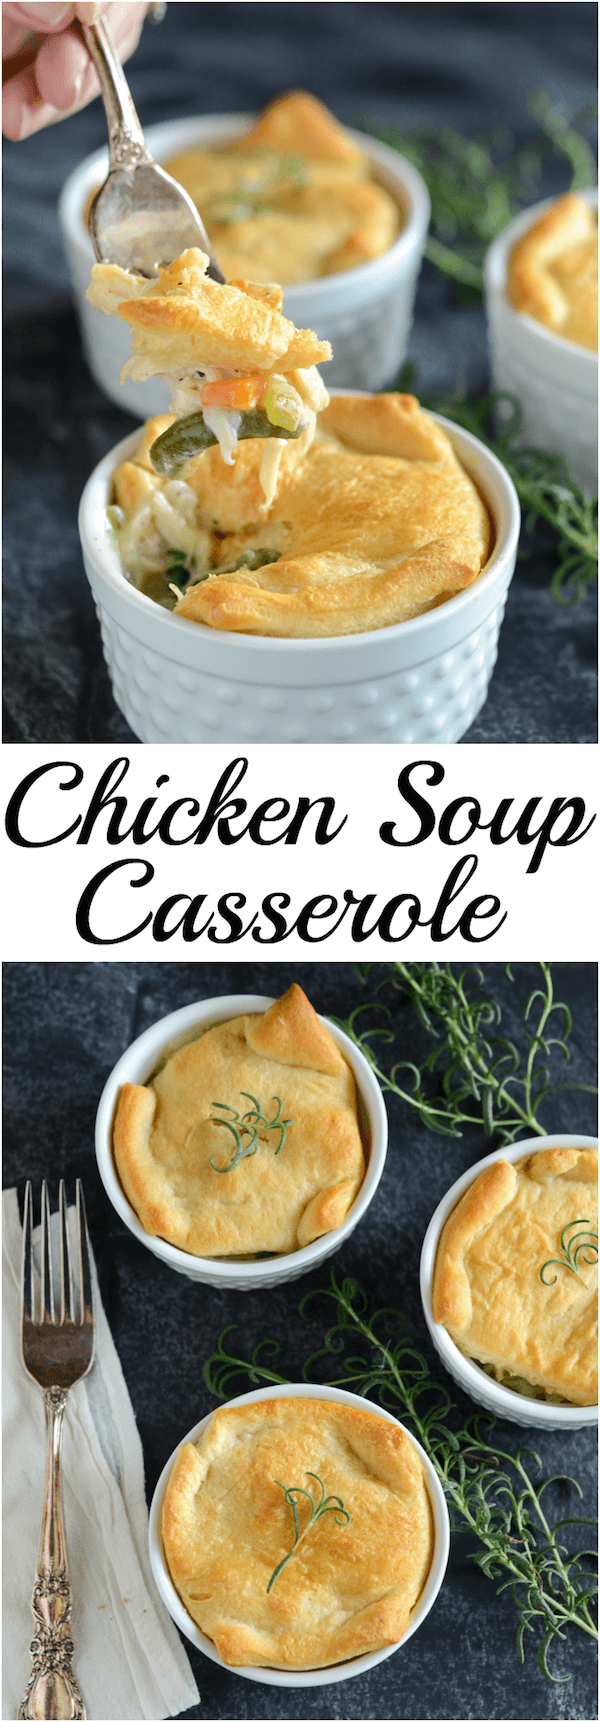 Chicken and Vegetable Casserole Recipe